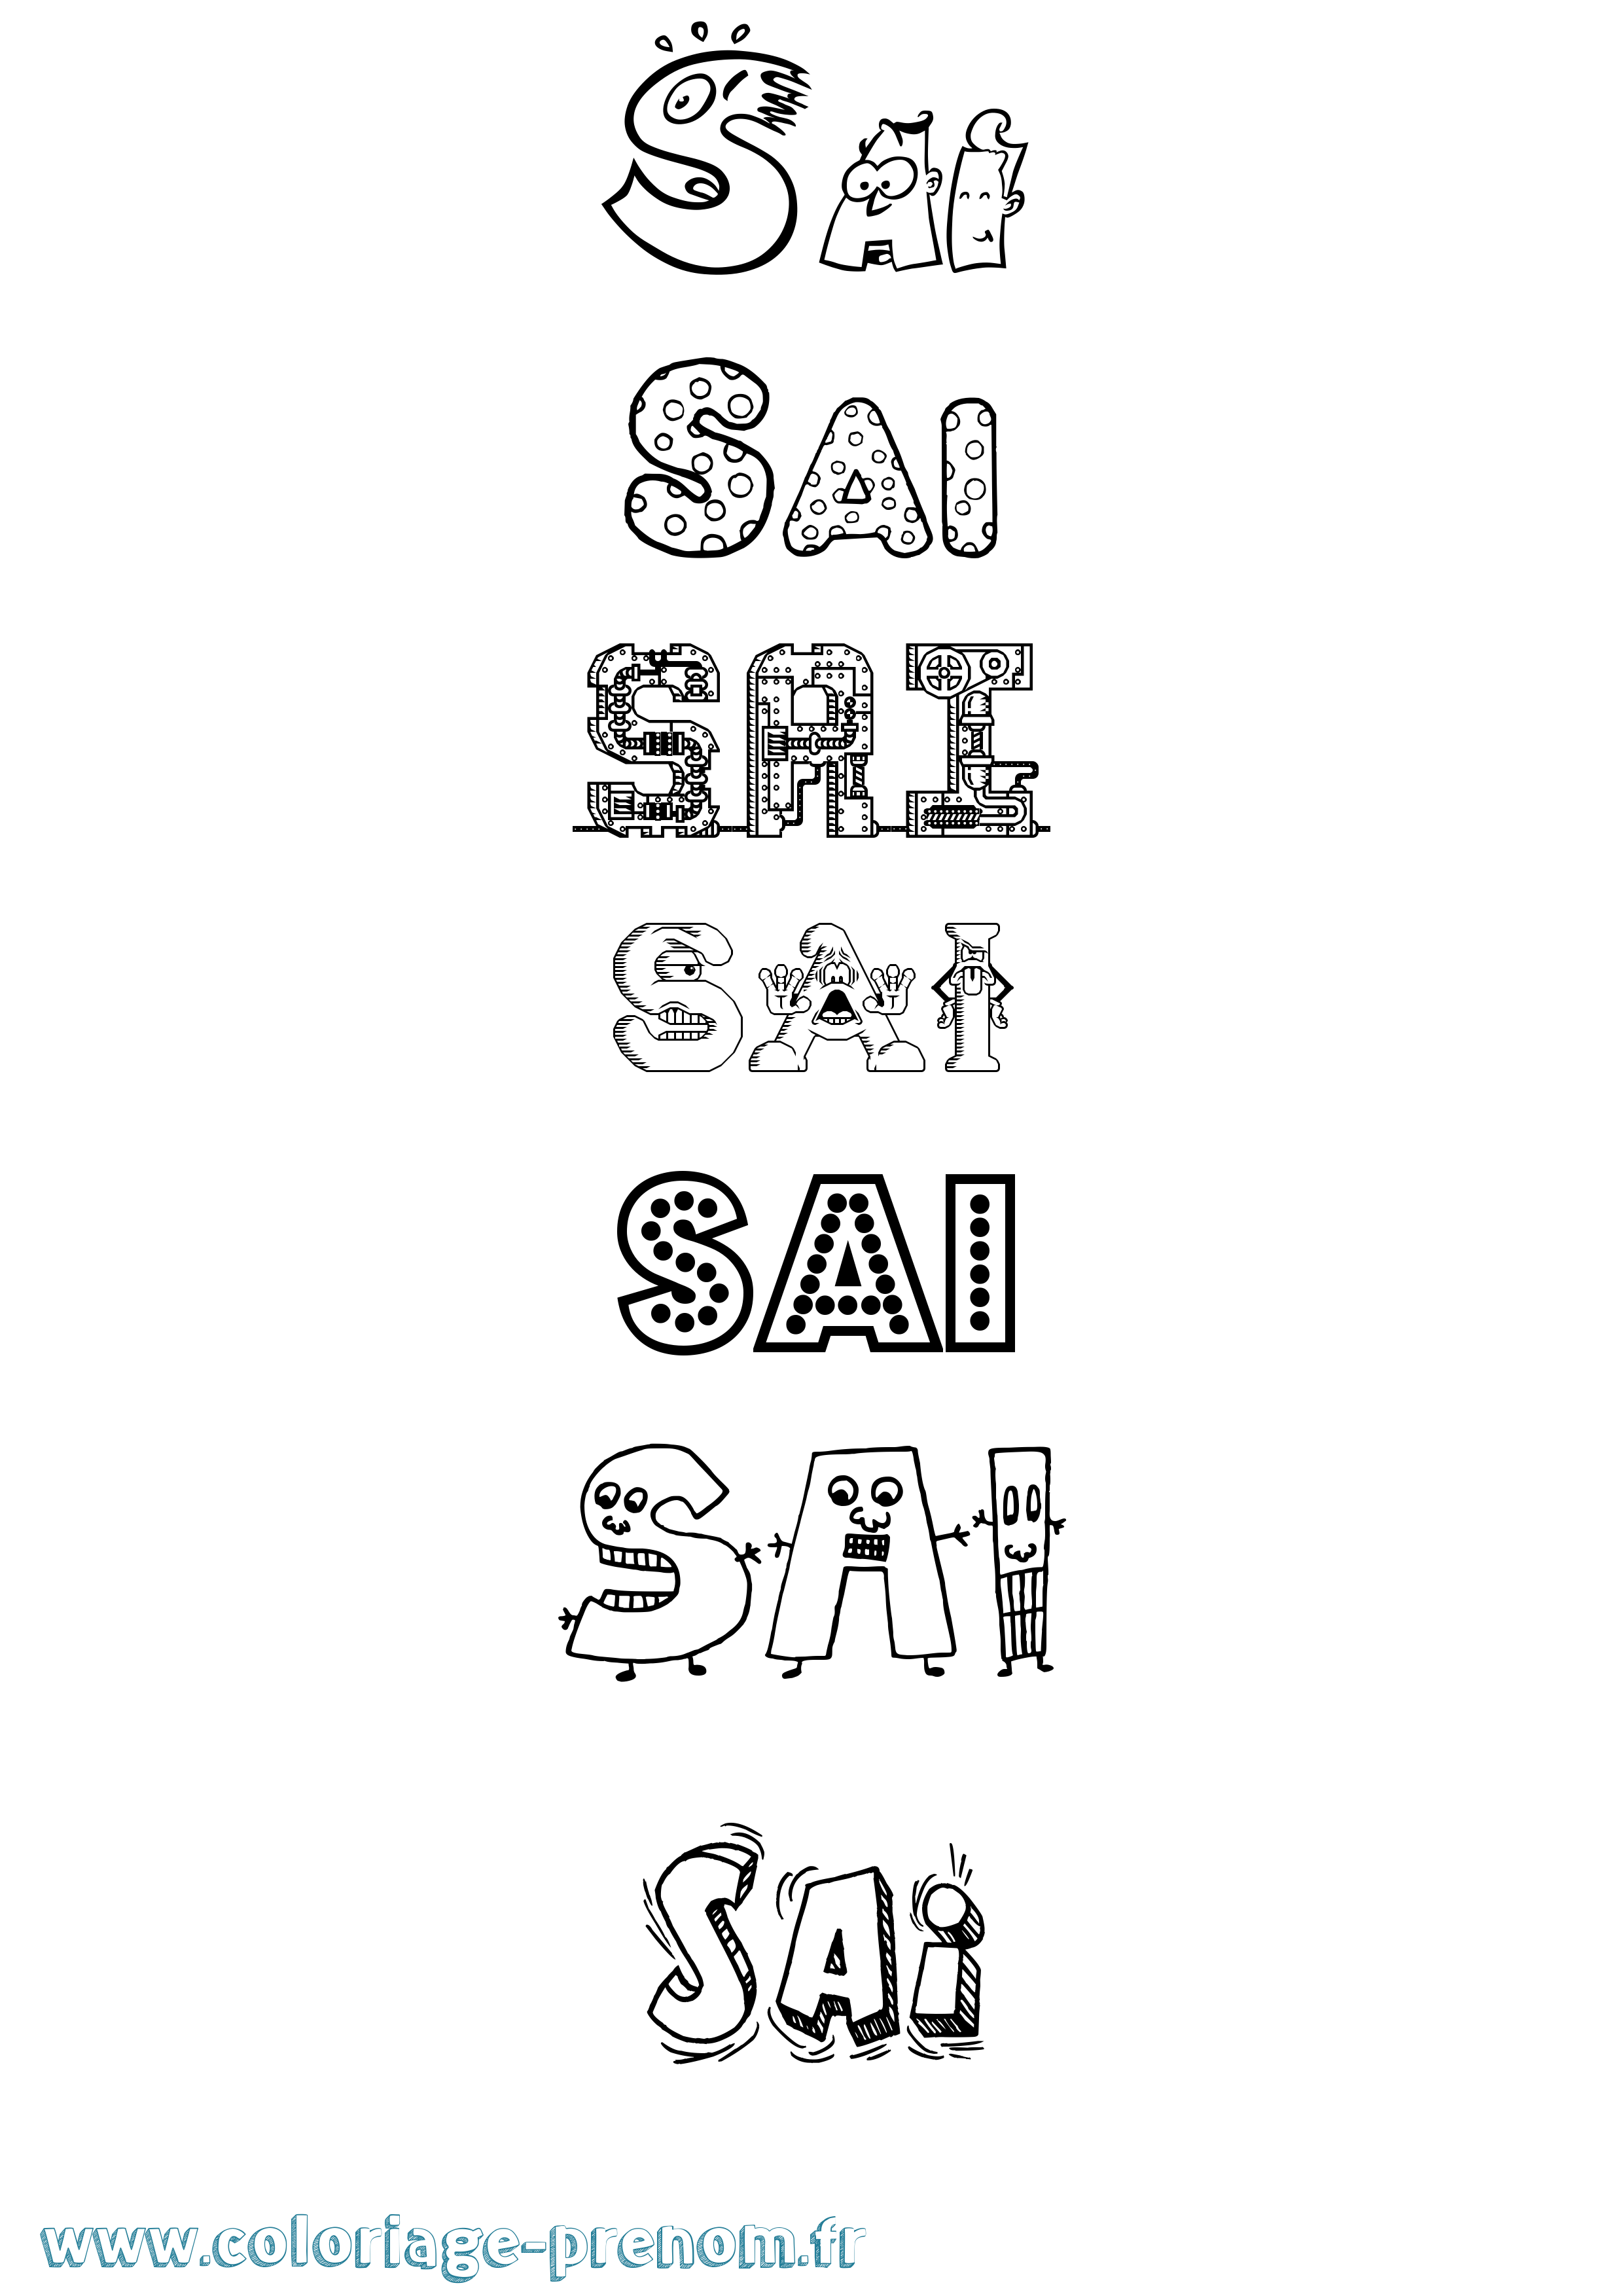 Coloriage prénom Sai Fun